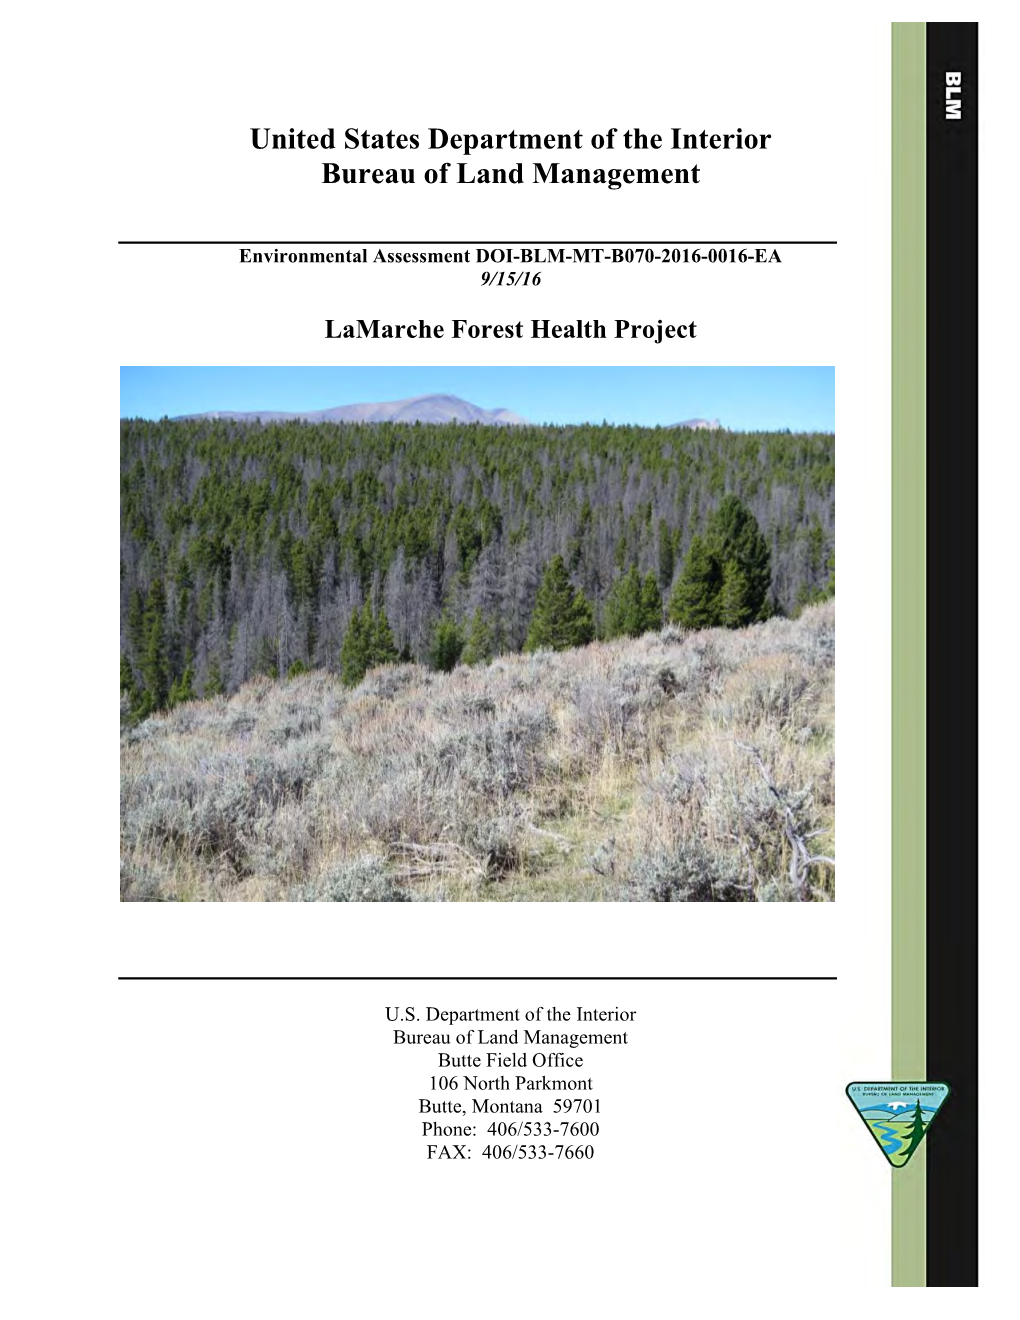 Bureau of Land Management Environmental Assessment For